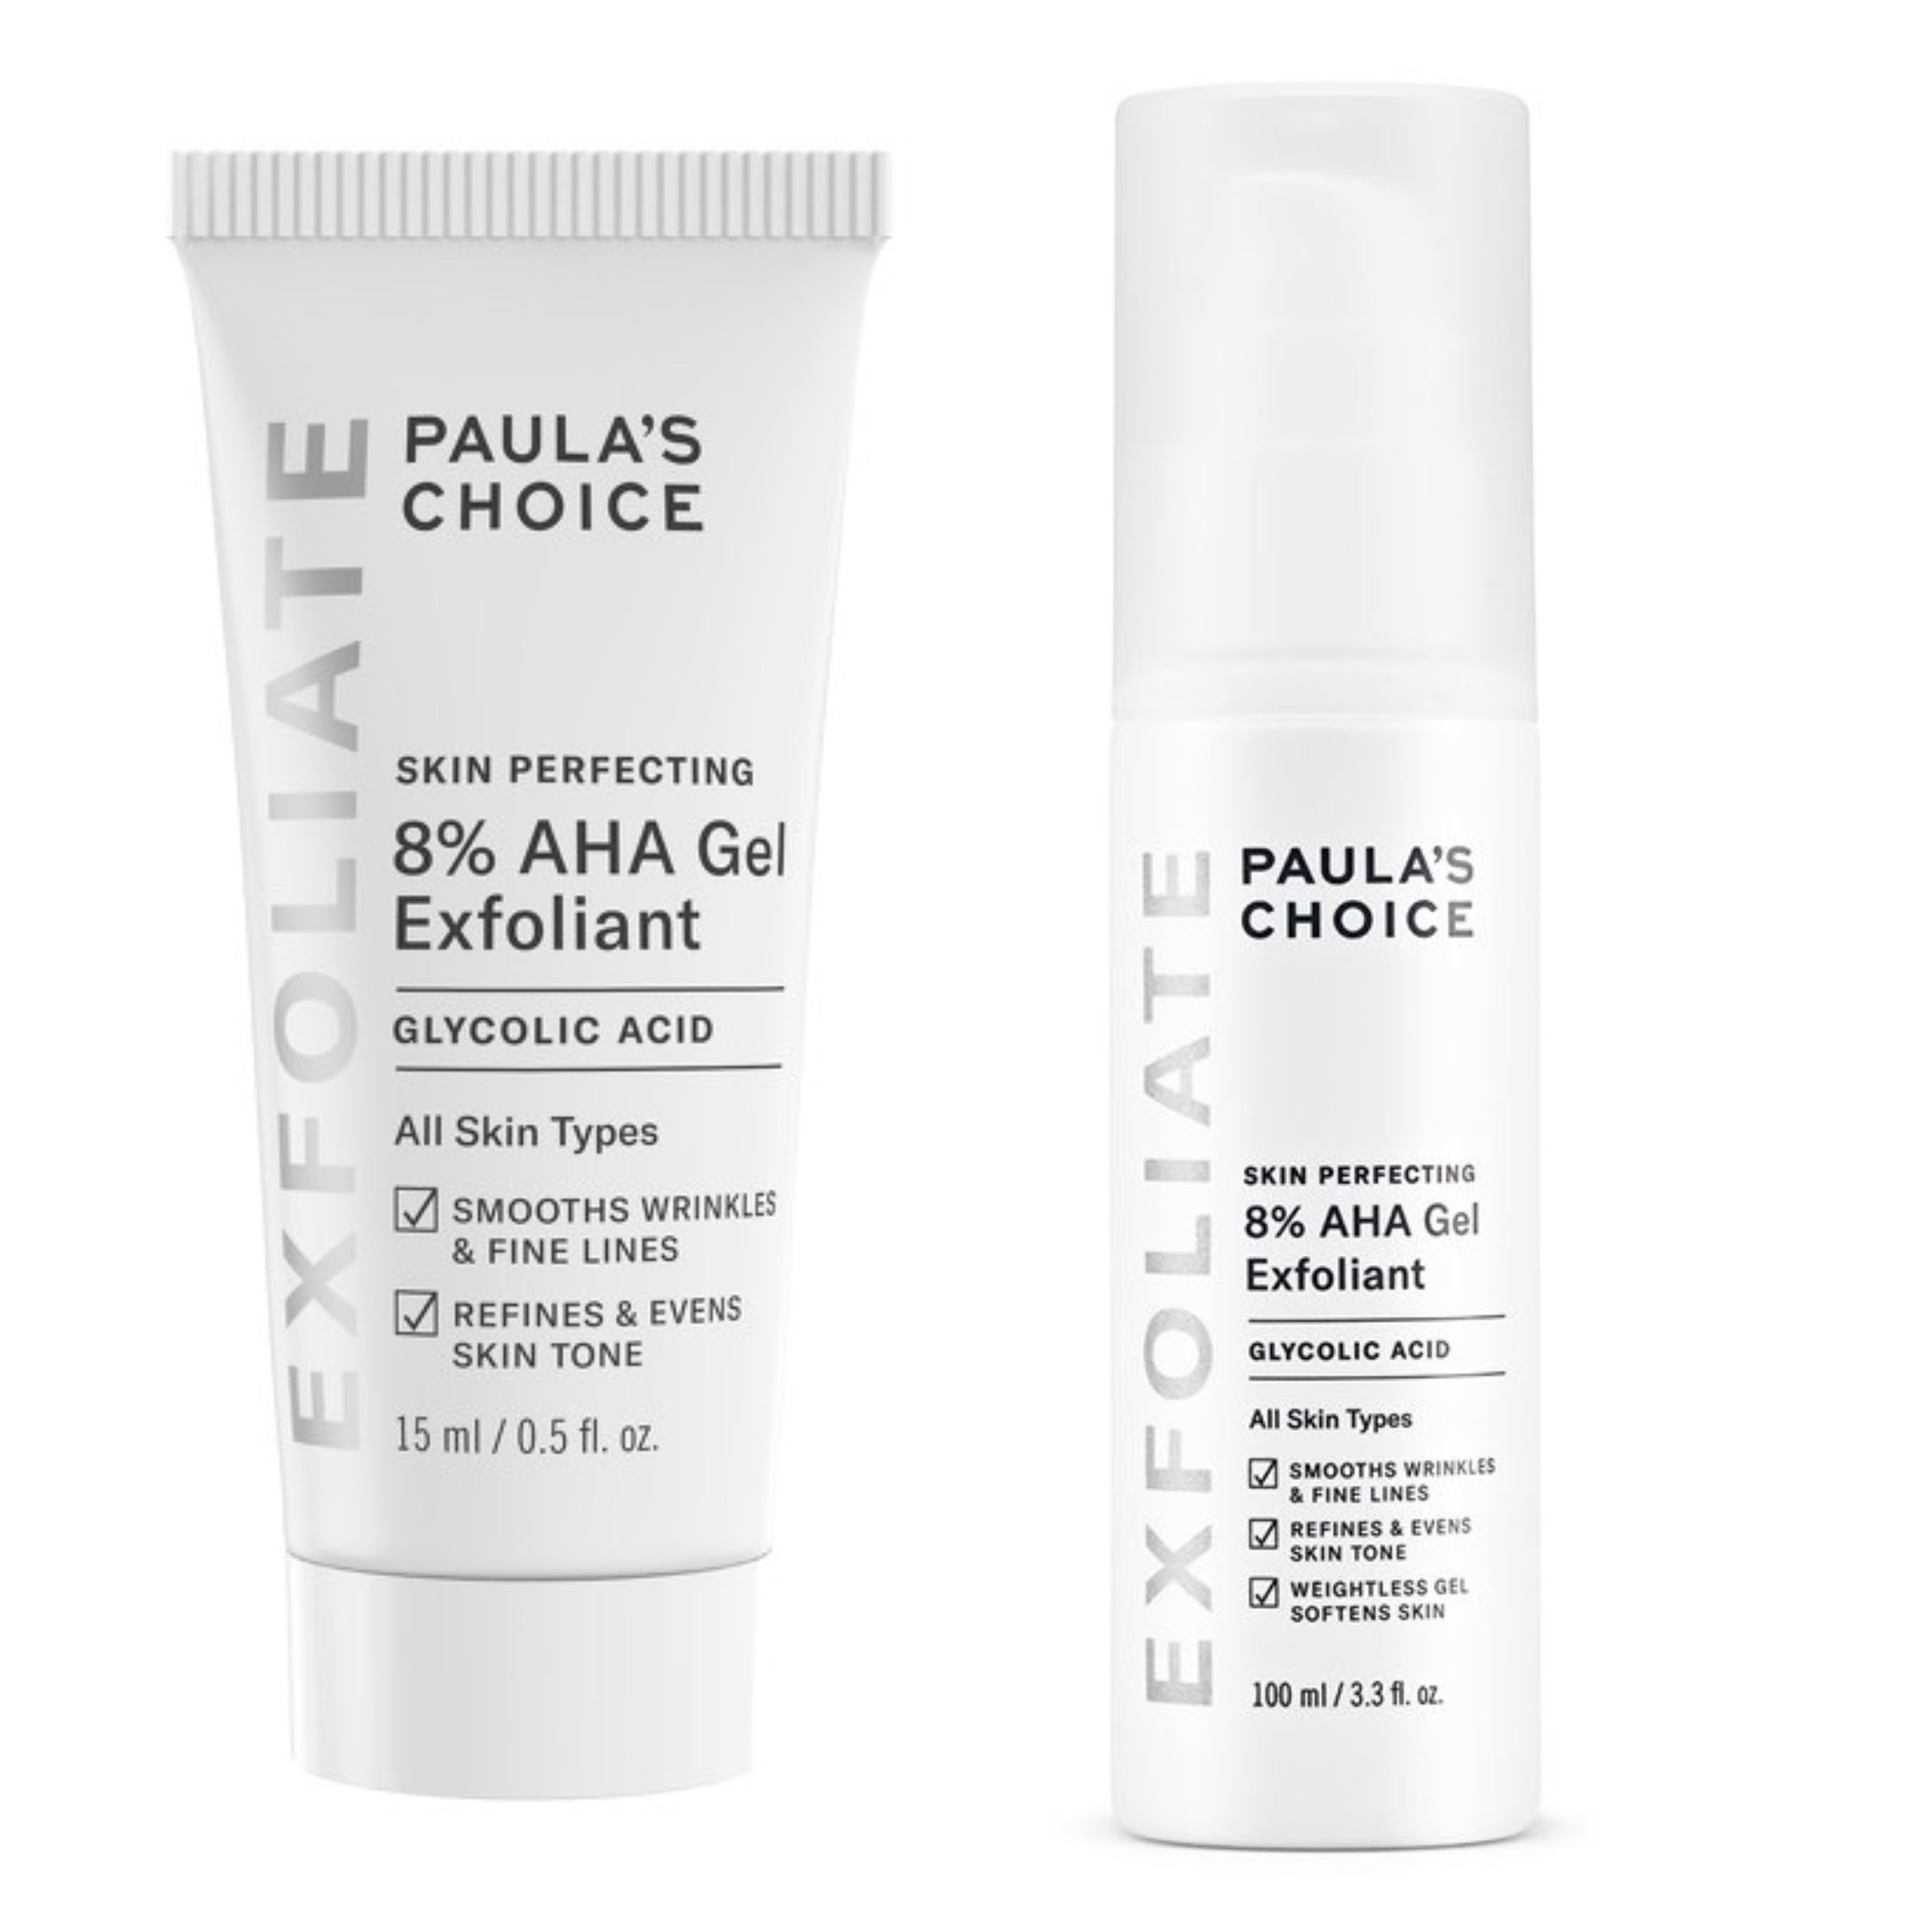 Bao Bì, Thiết Kế của Paula's Choice Skin Perfecting 8% AHA Gel Exfoliant